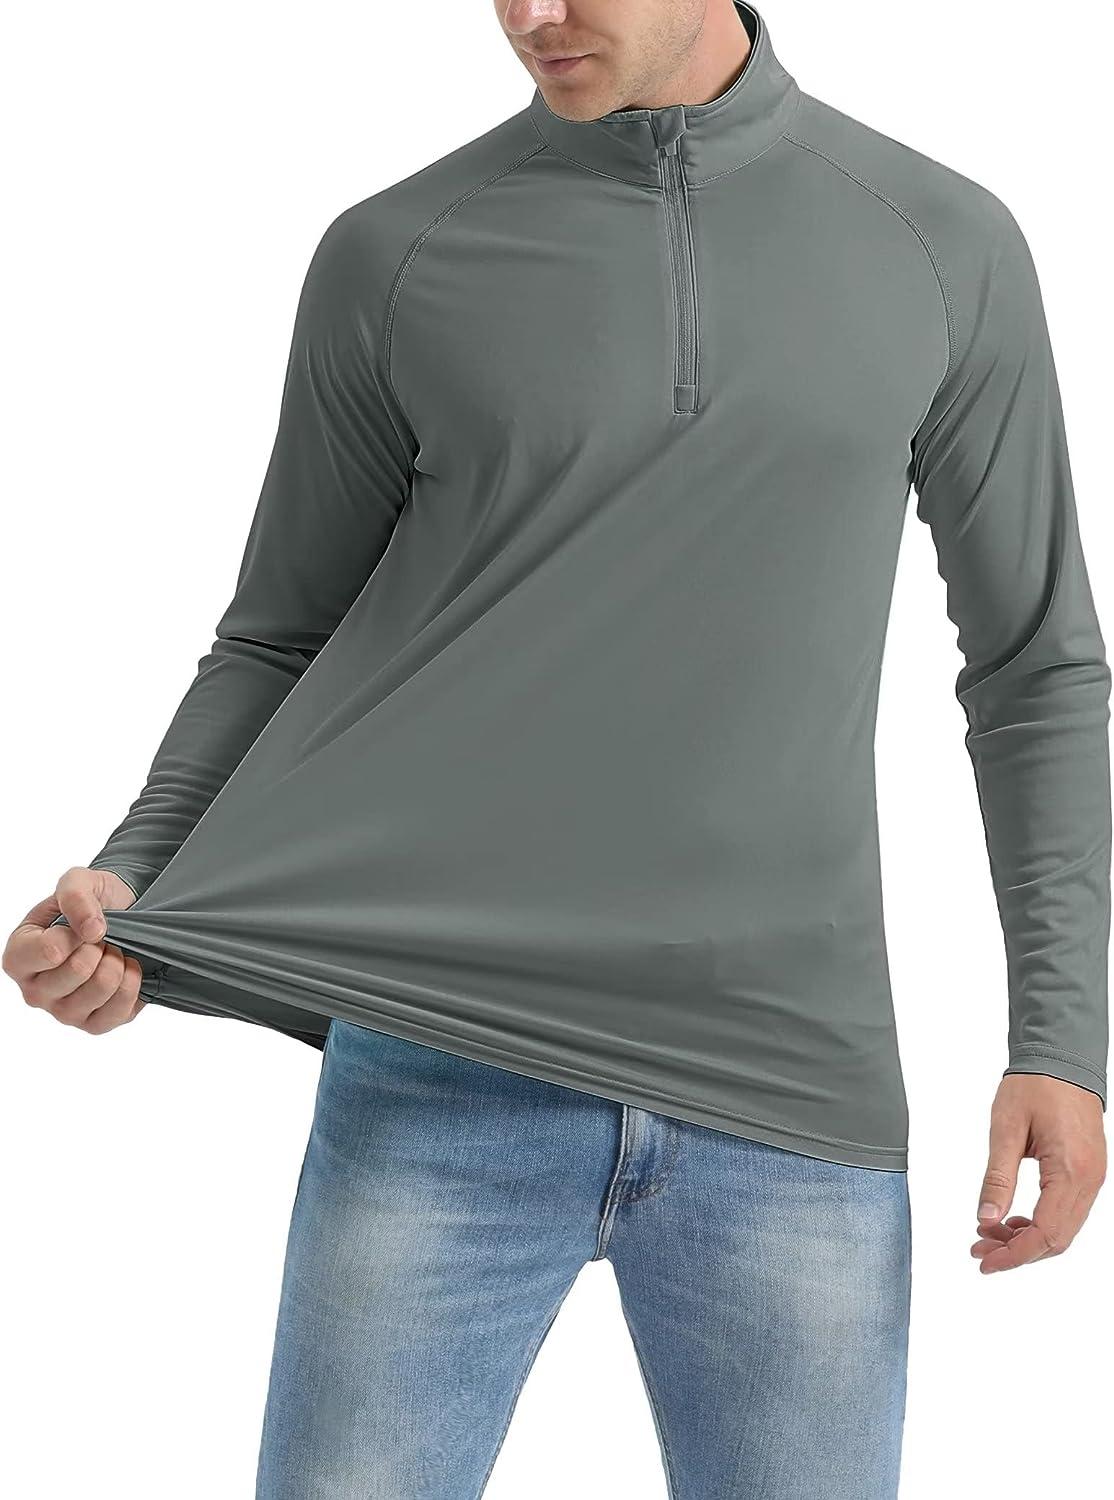 MAGCOMSEN Men's Long Sleeve Sun Shirts UPF 50+ Tees 1/4 Zip Up